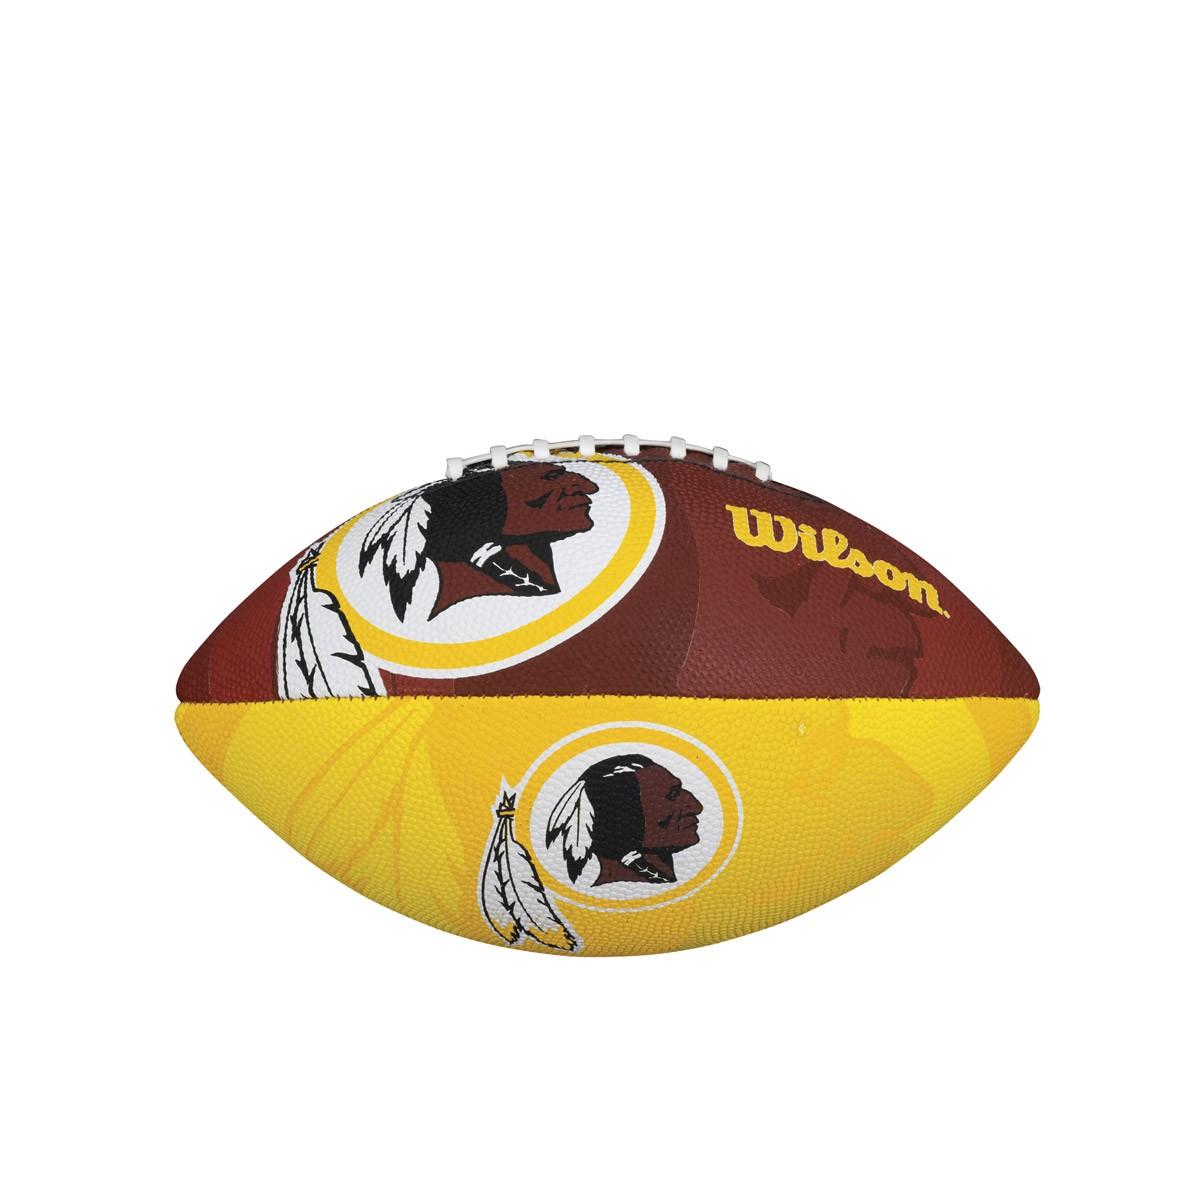 NFL Team Logo Junior Size American Football - Washington Redskins